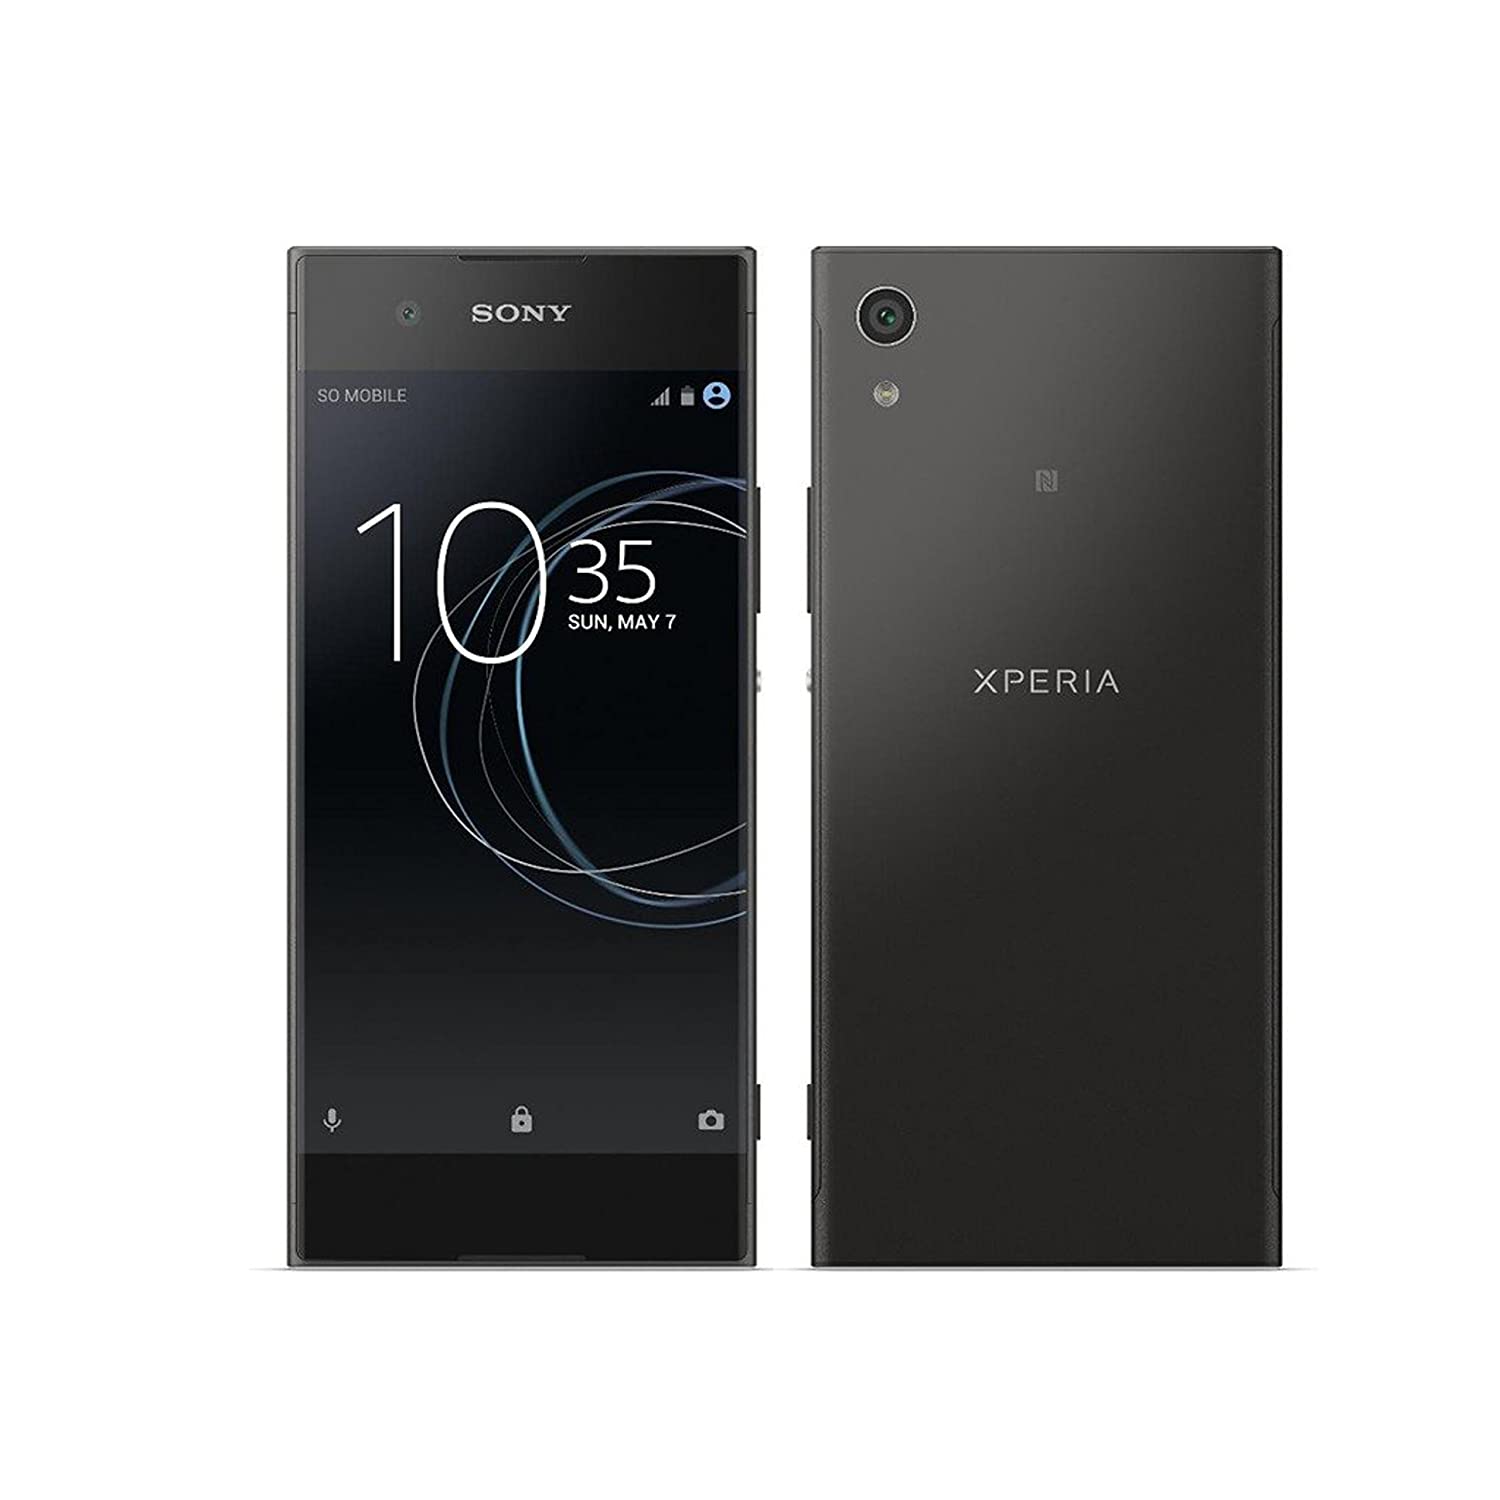 Sony xperia xa1 ultra – средний фаблет, который слишком дорого стоит - рабочаятехника